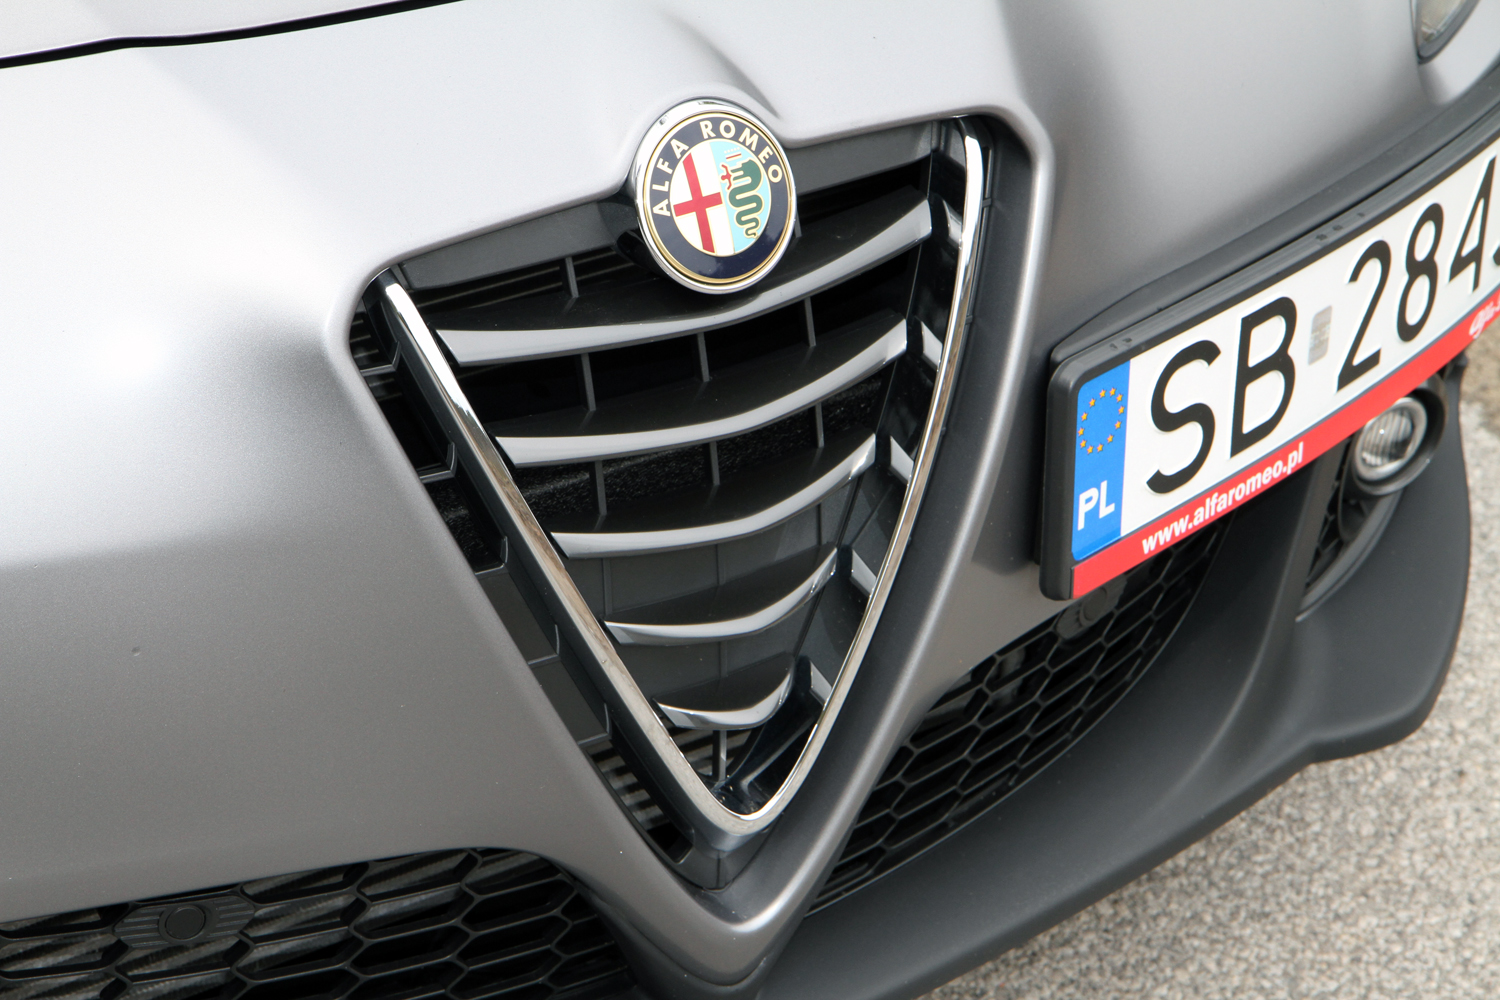 Piękna Giulietta zwycięża Fleet Auto Premium